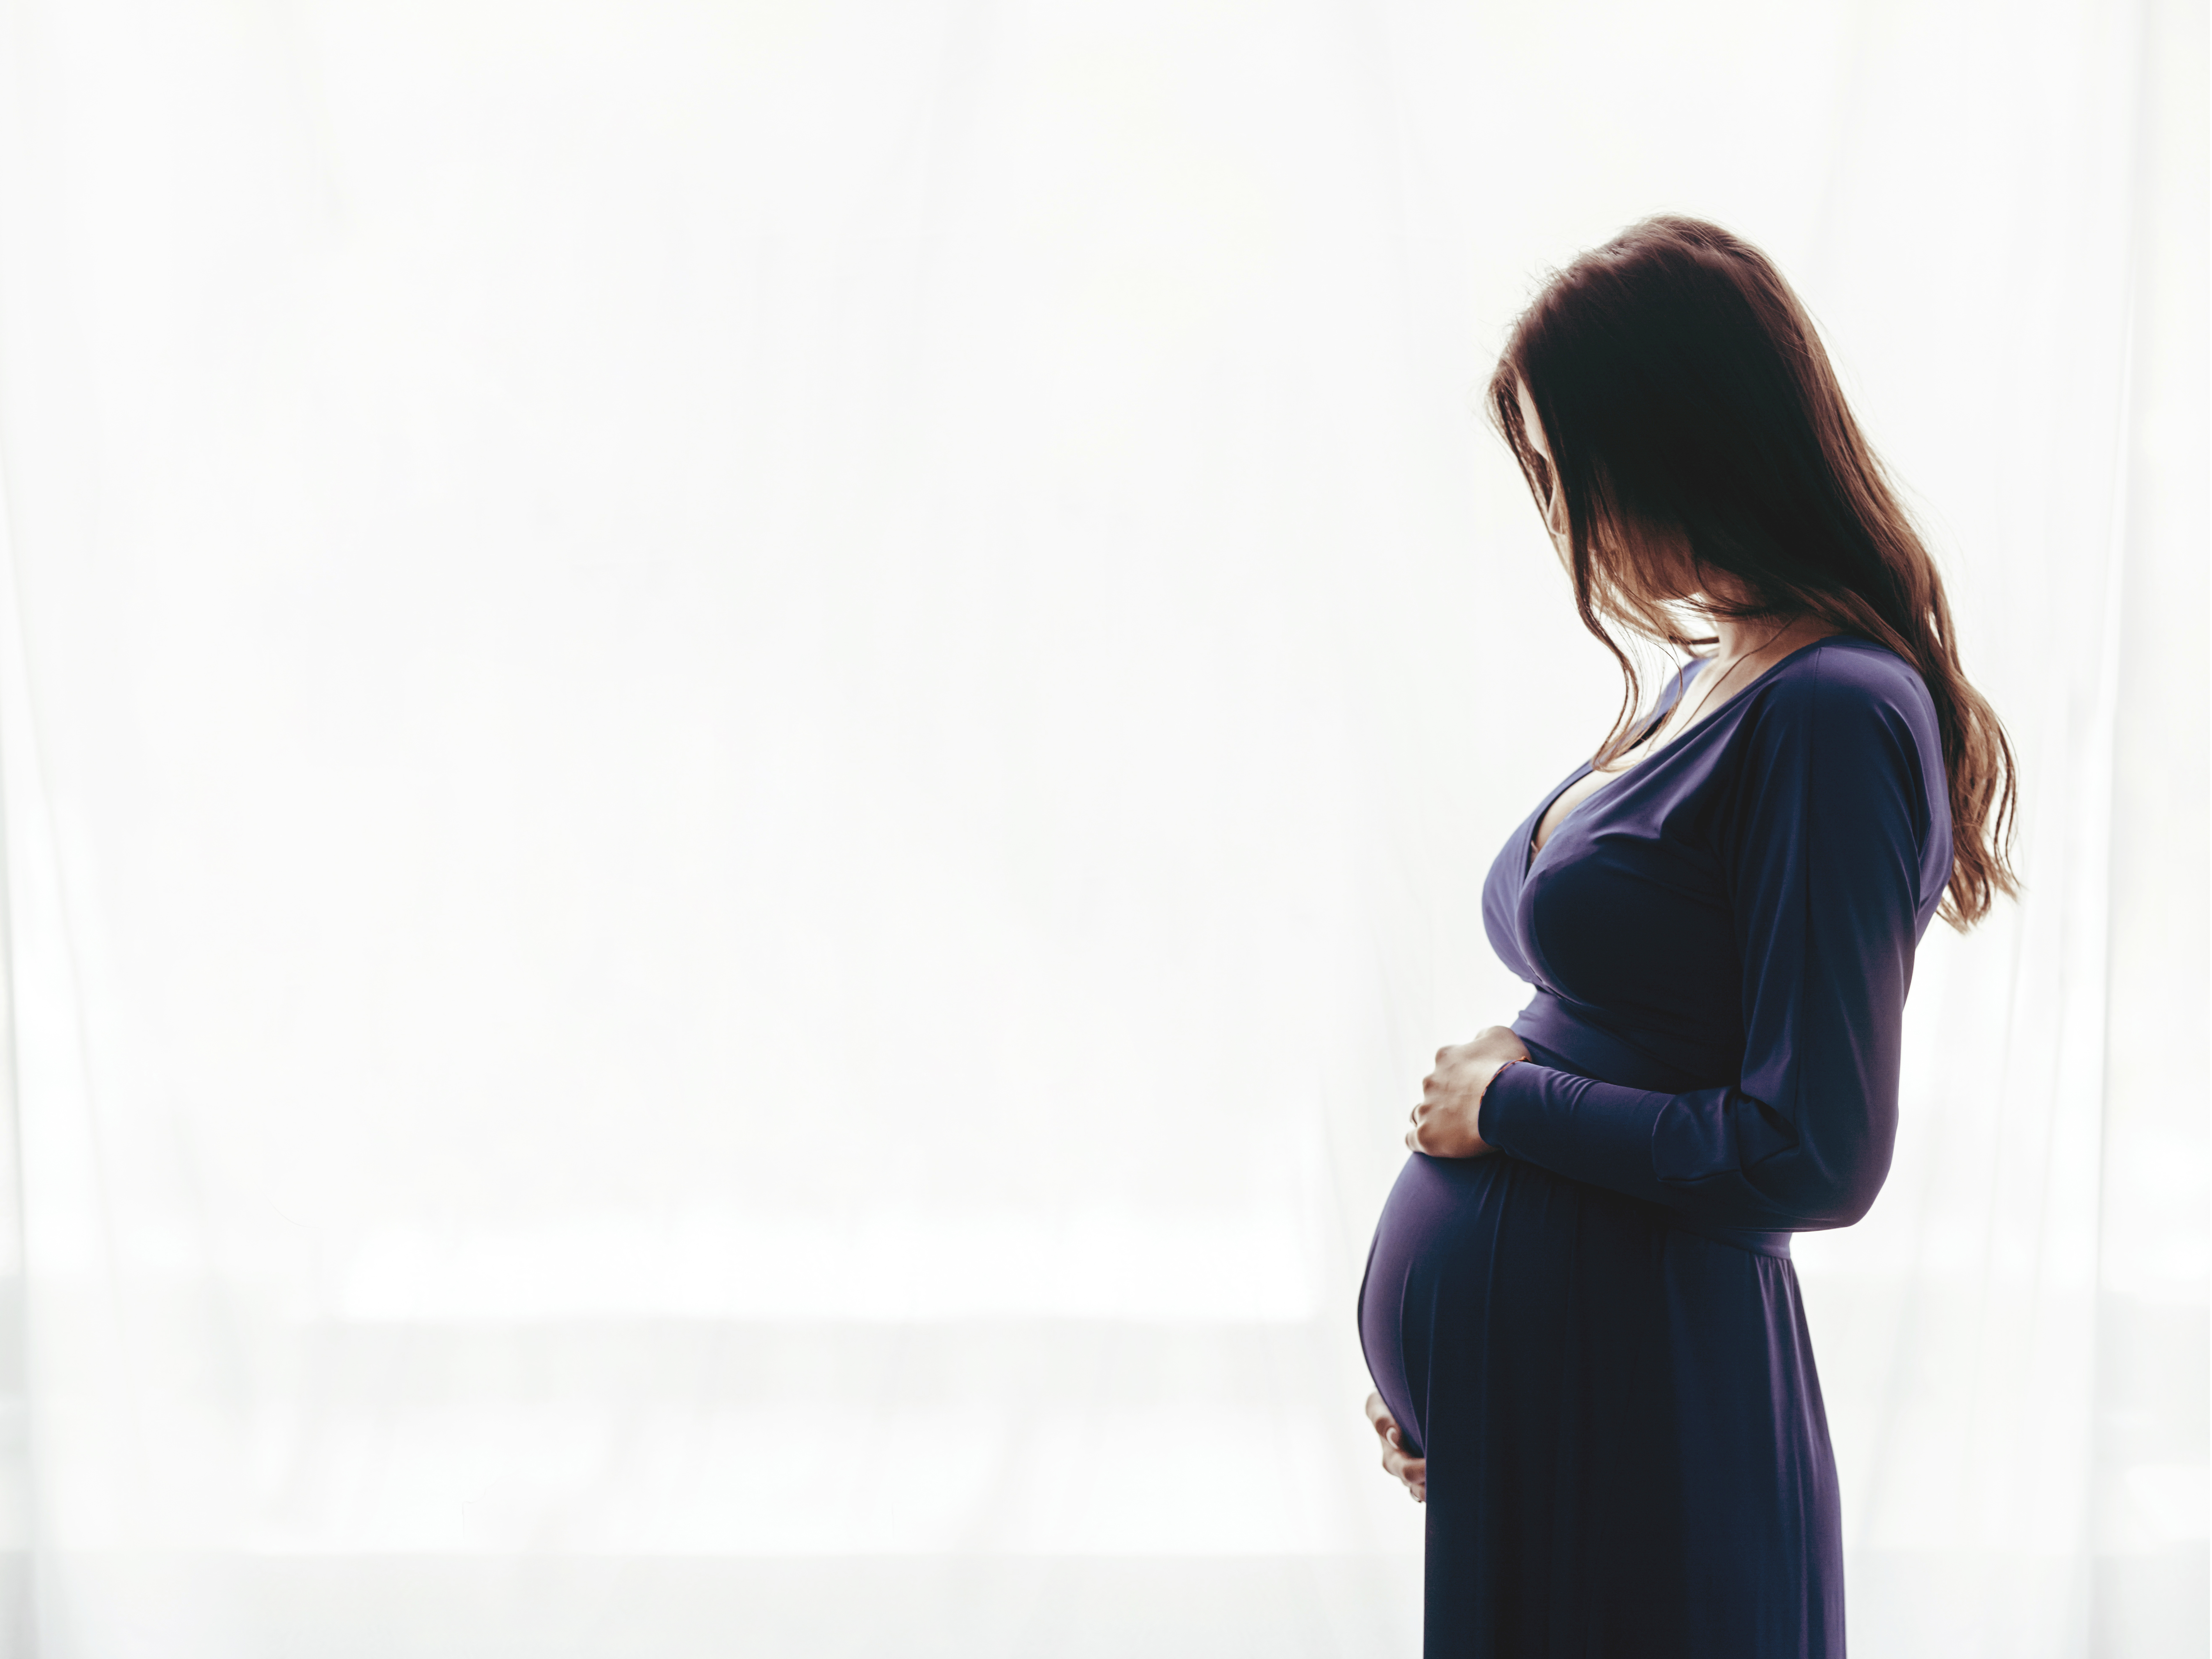 Une jeune femme enceinte berçant son baby bump | Source : Shutterstock